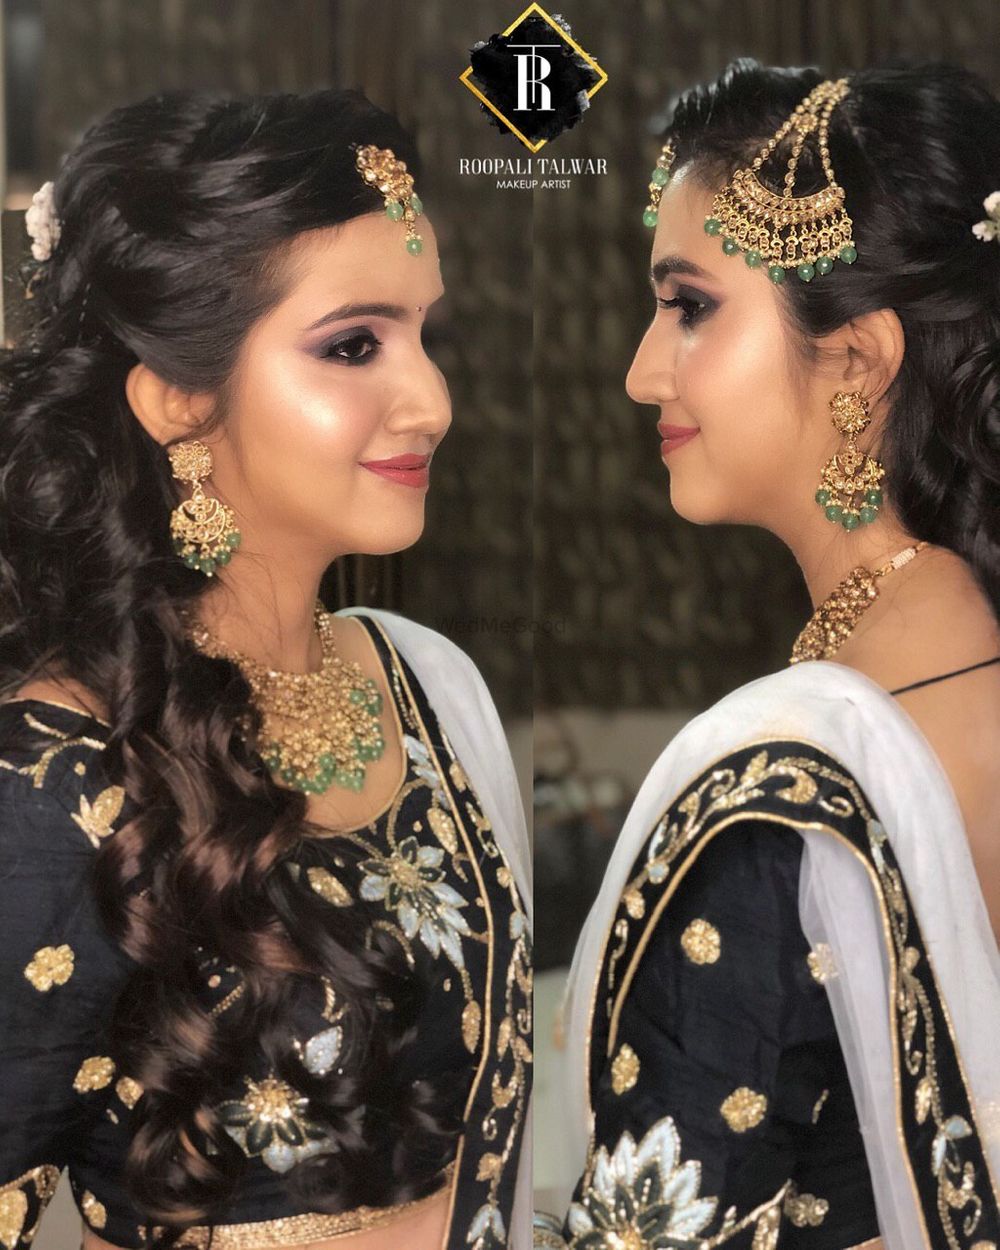 Photo From Muslim brides  - By Roopali Talwar Makeup Artist